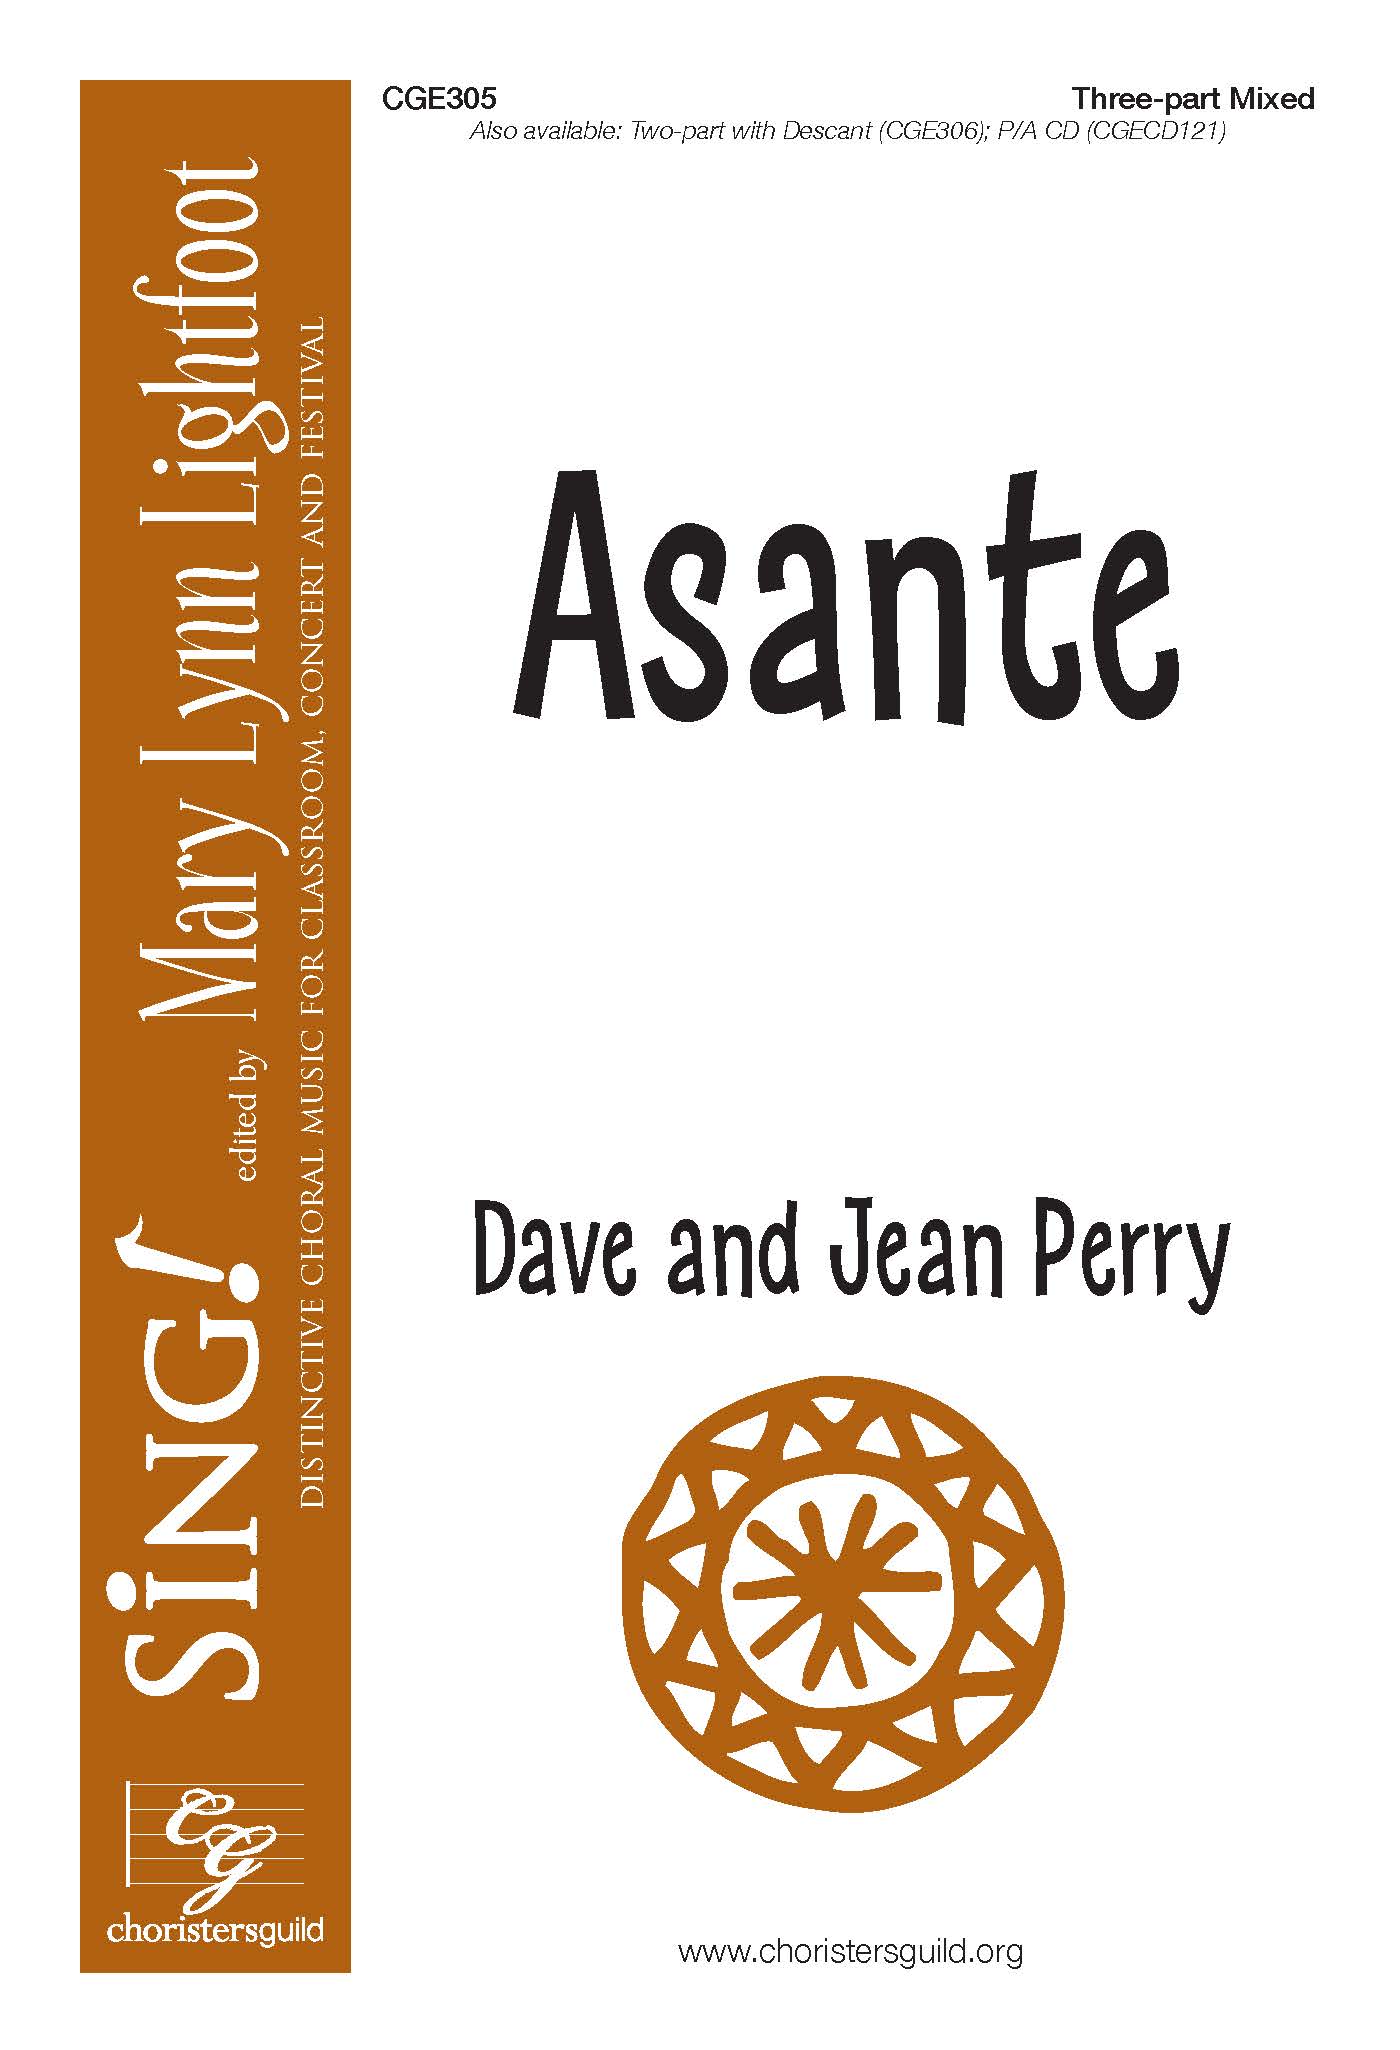 Asante - Three-part Mixed